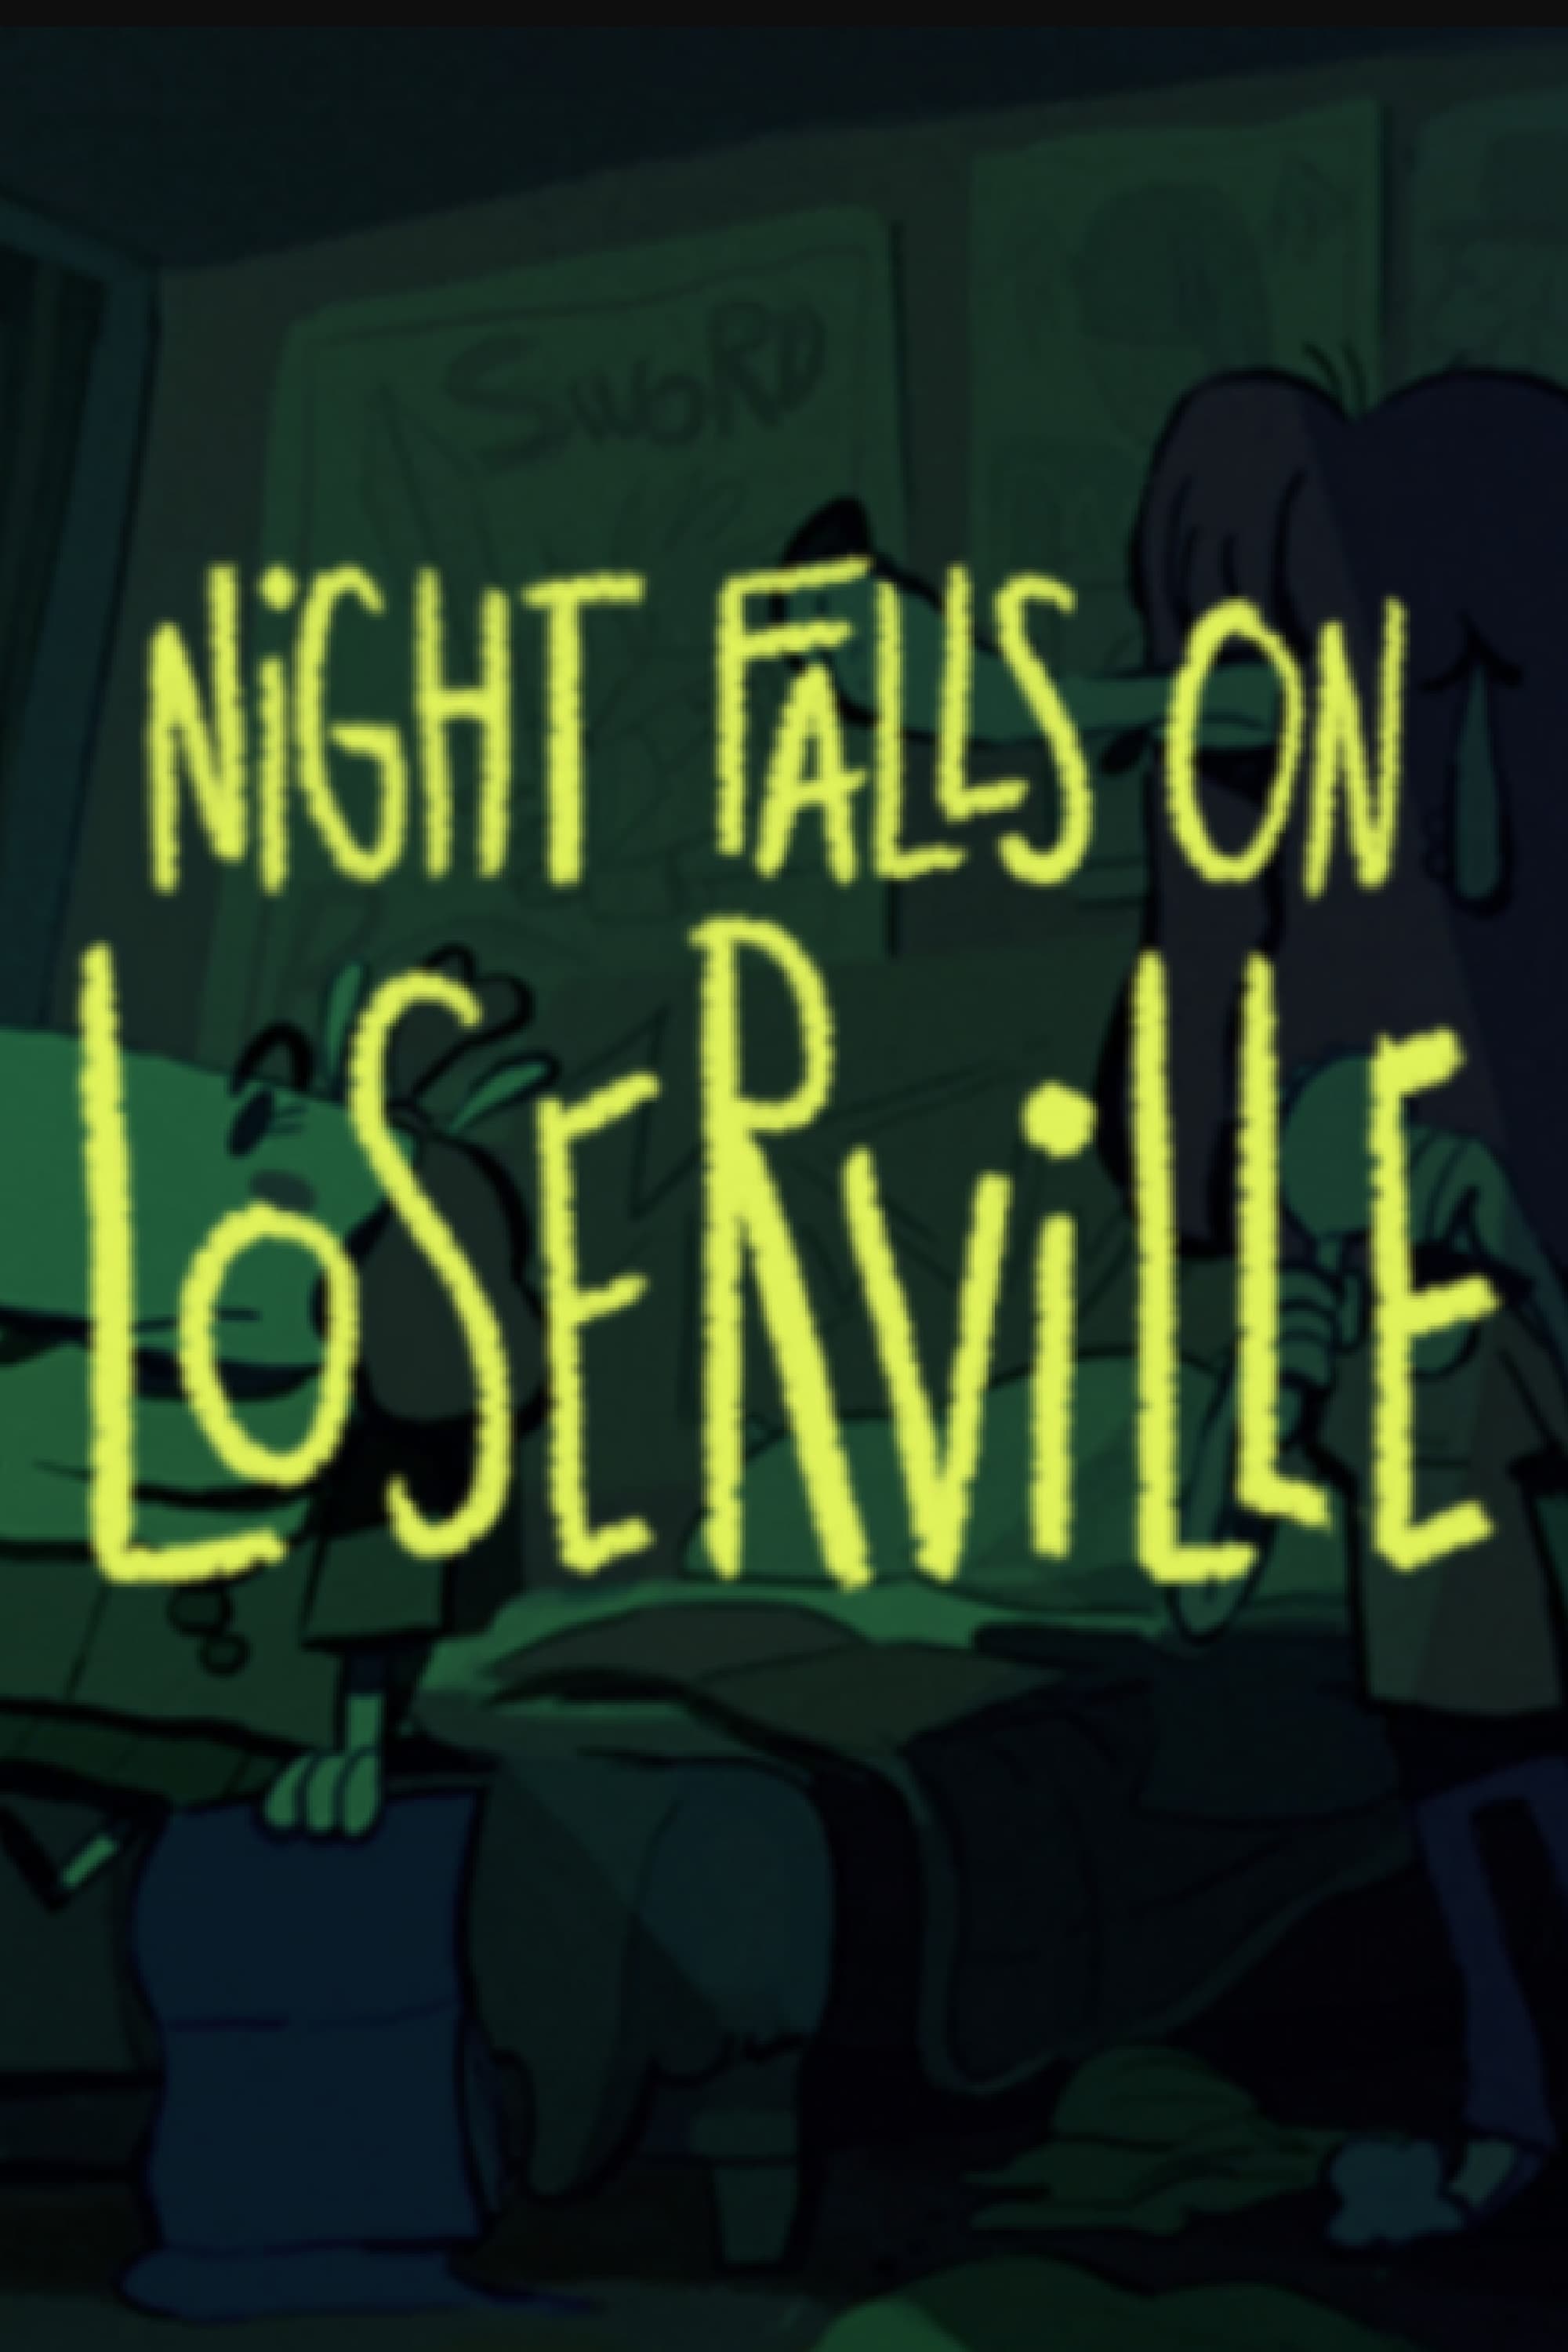 Night Falls on Loserville